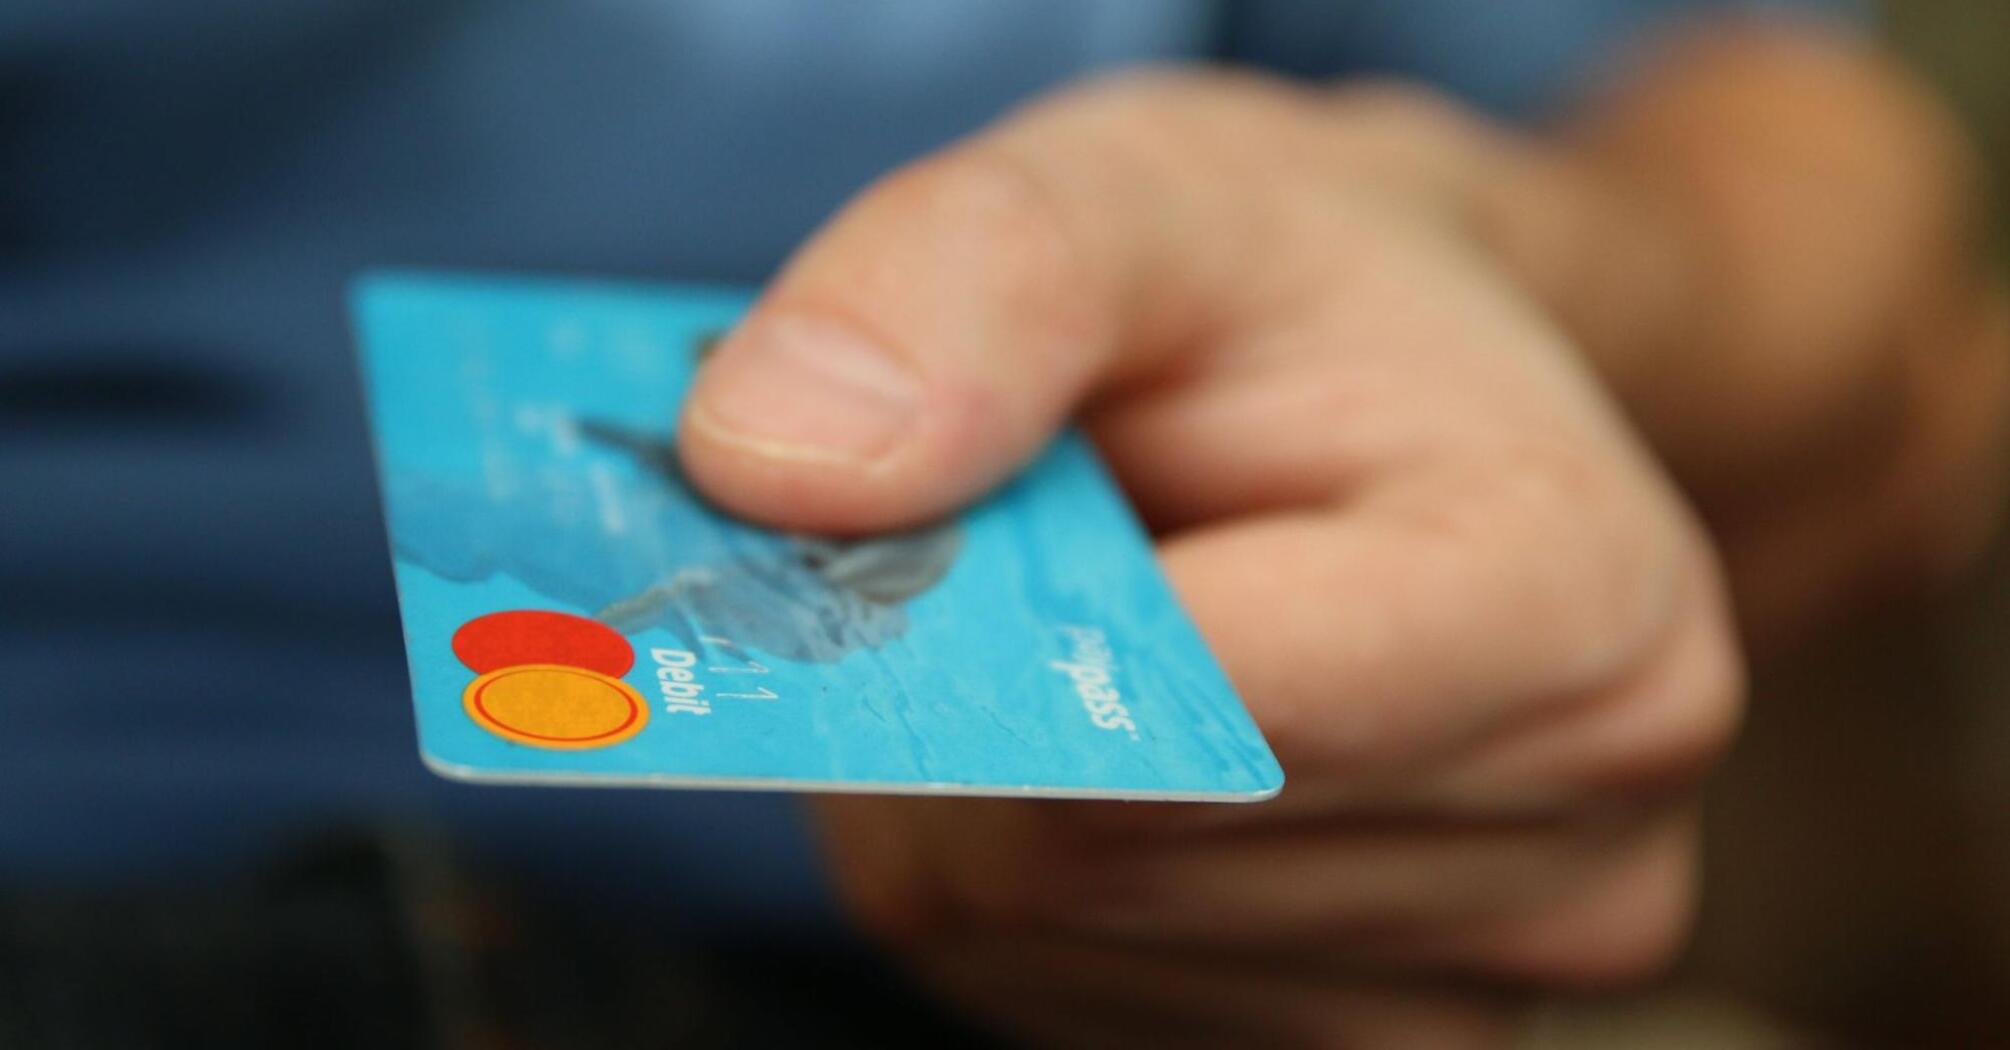 Blue payment card 